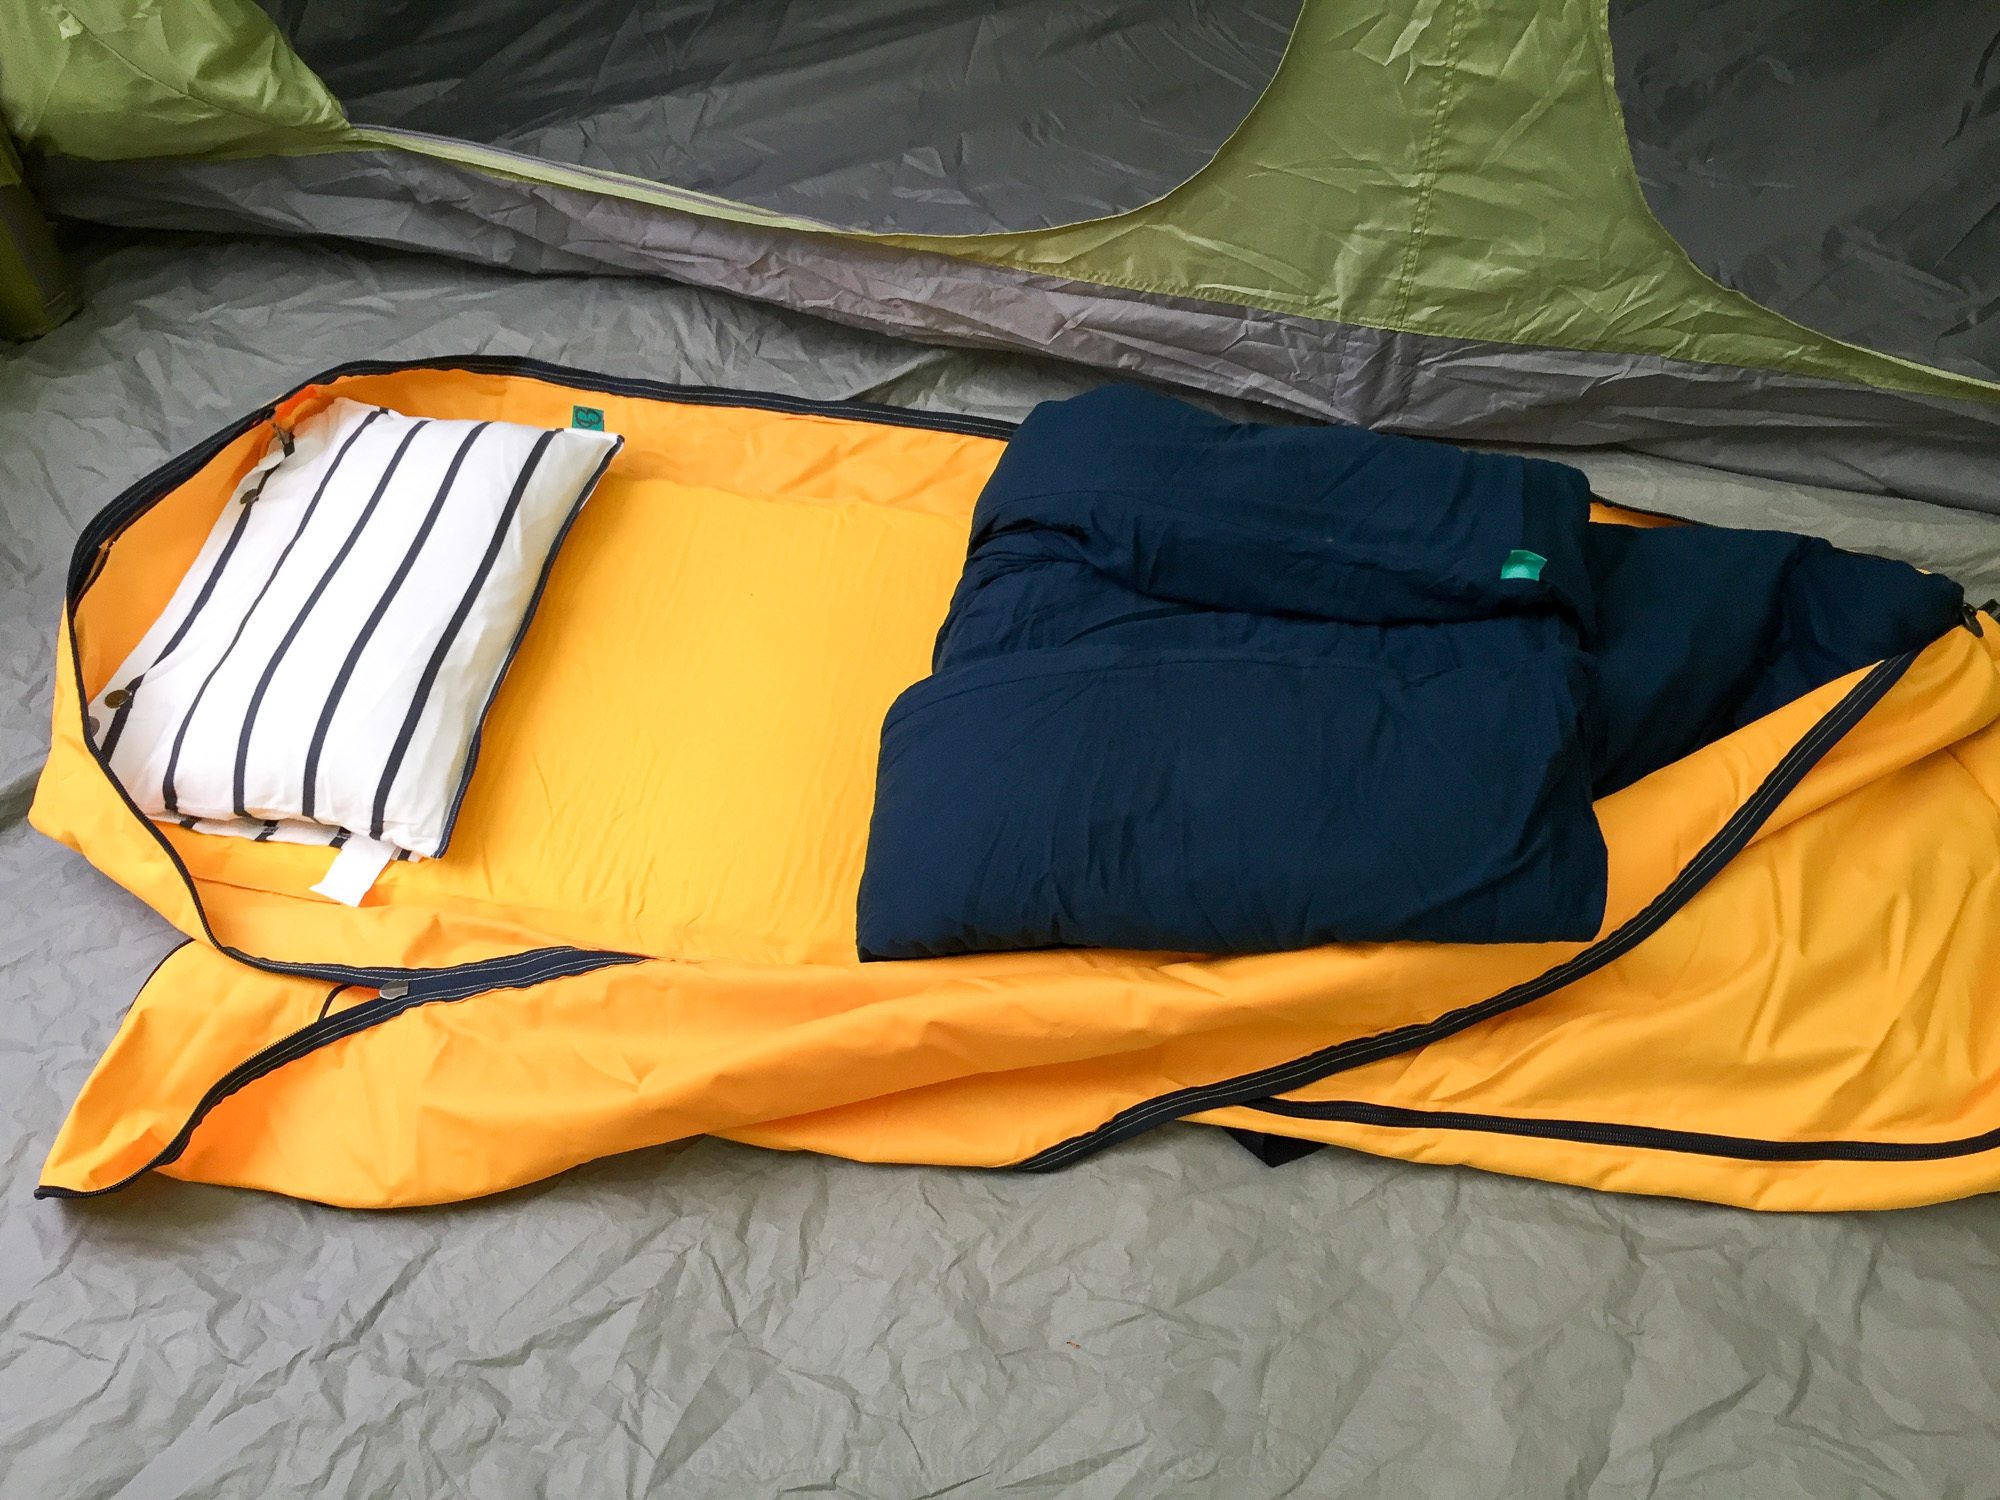 Bundle Bed Unzipped